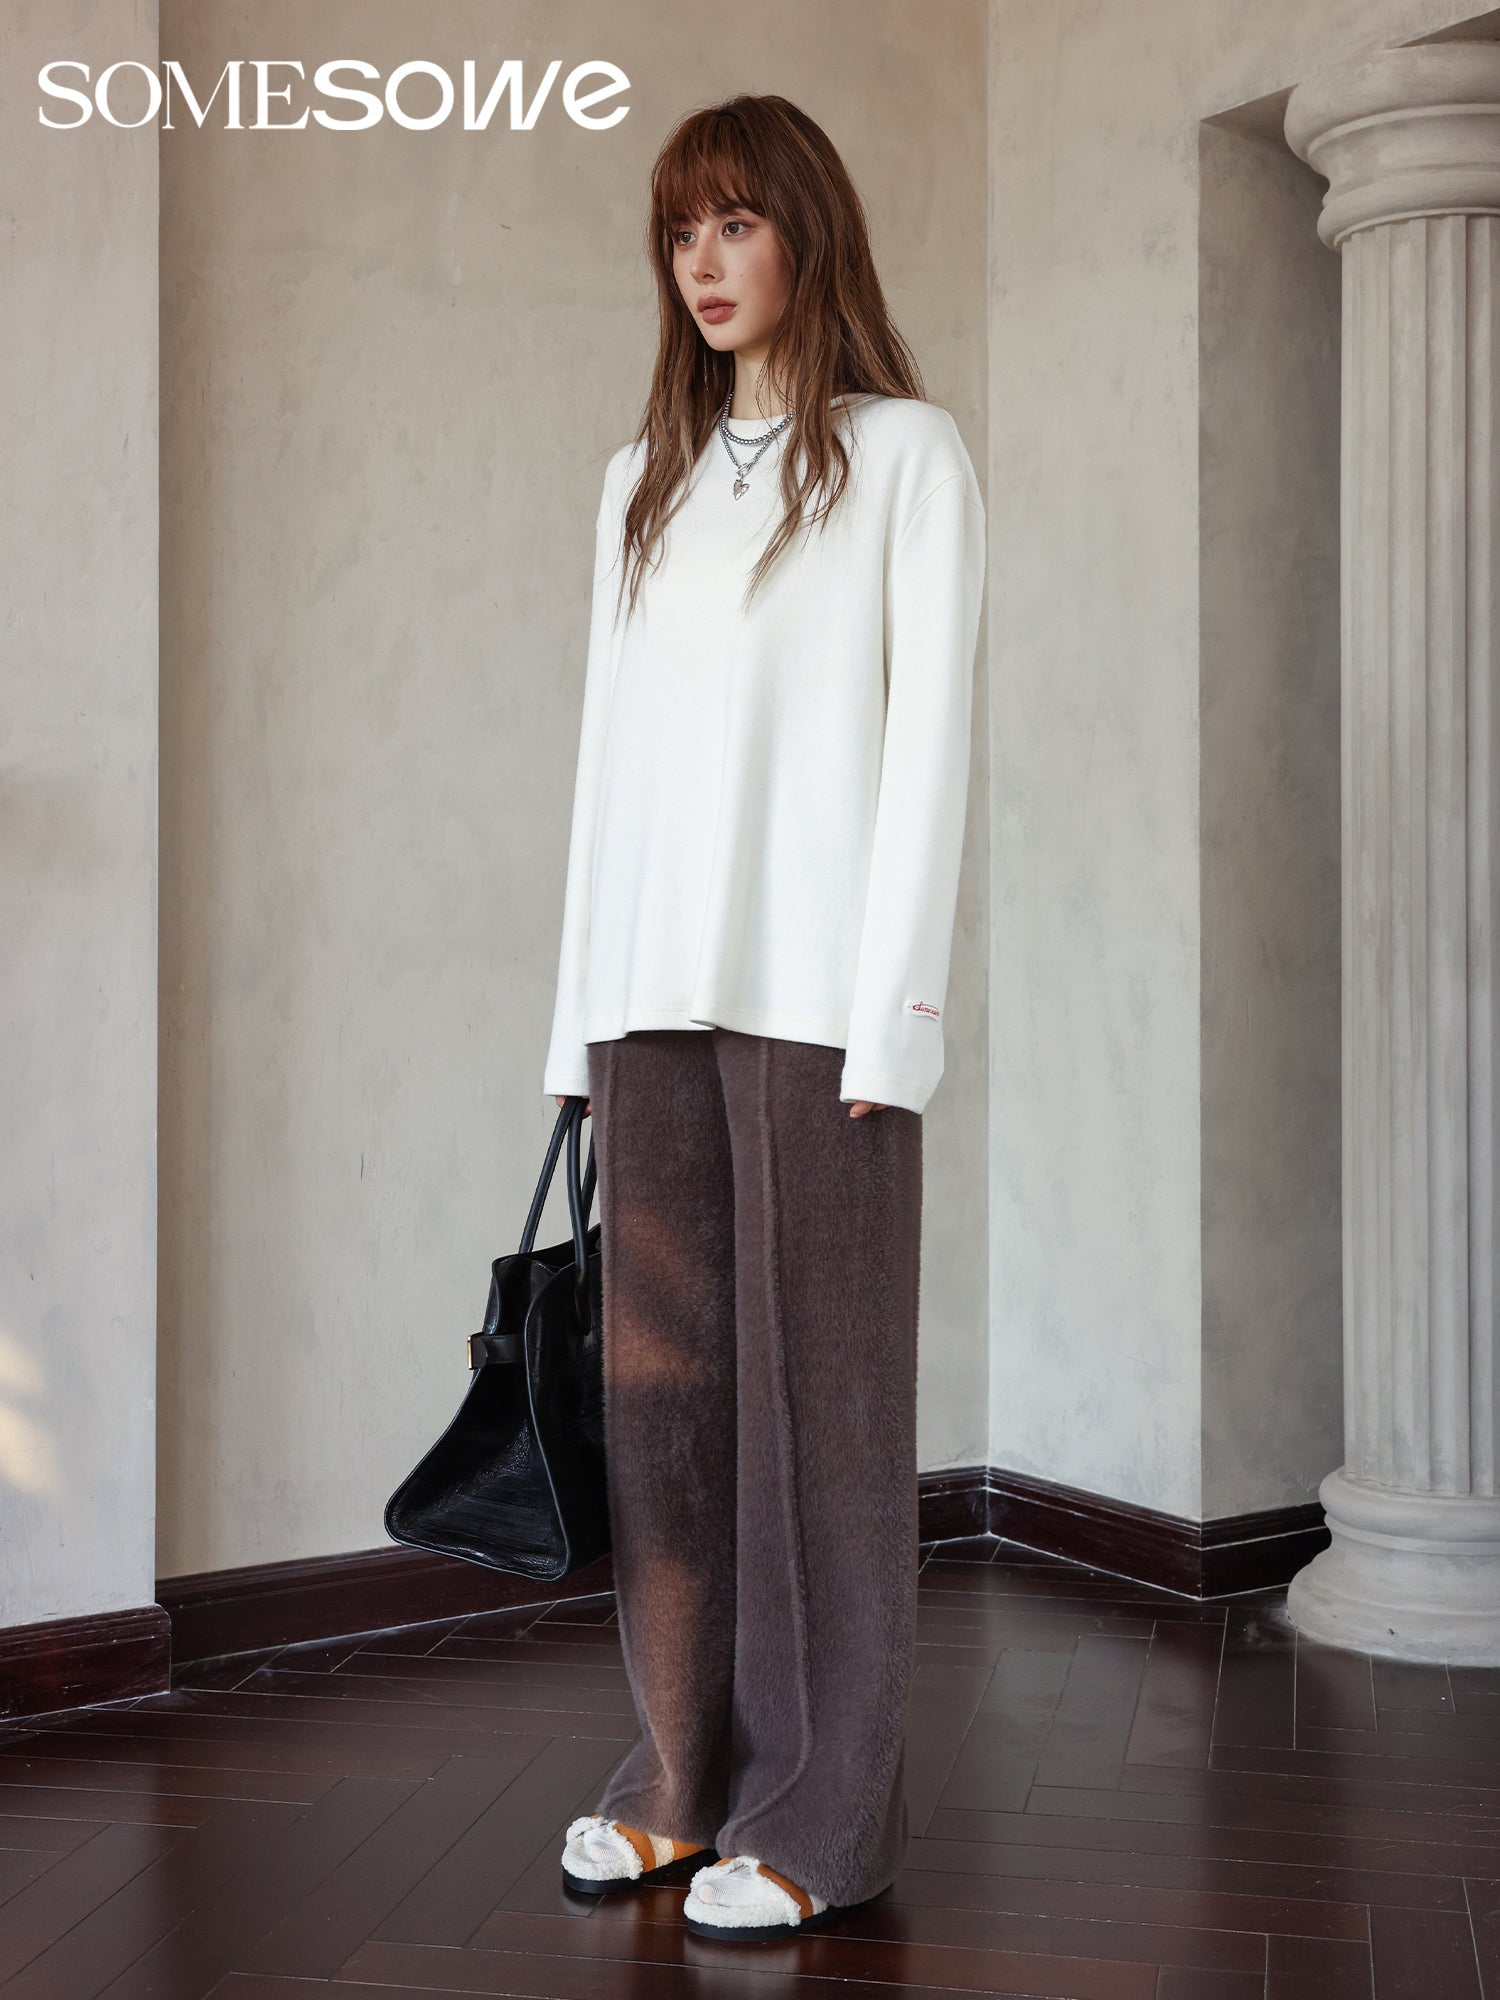 SOMESOWE Brown Faux Fur Knitting Pants | MADA IN CHINA